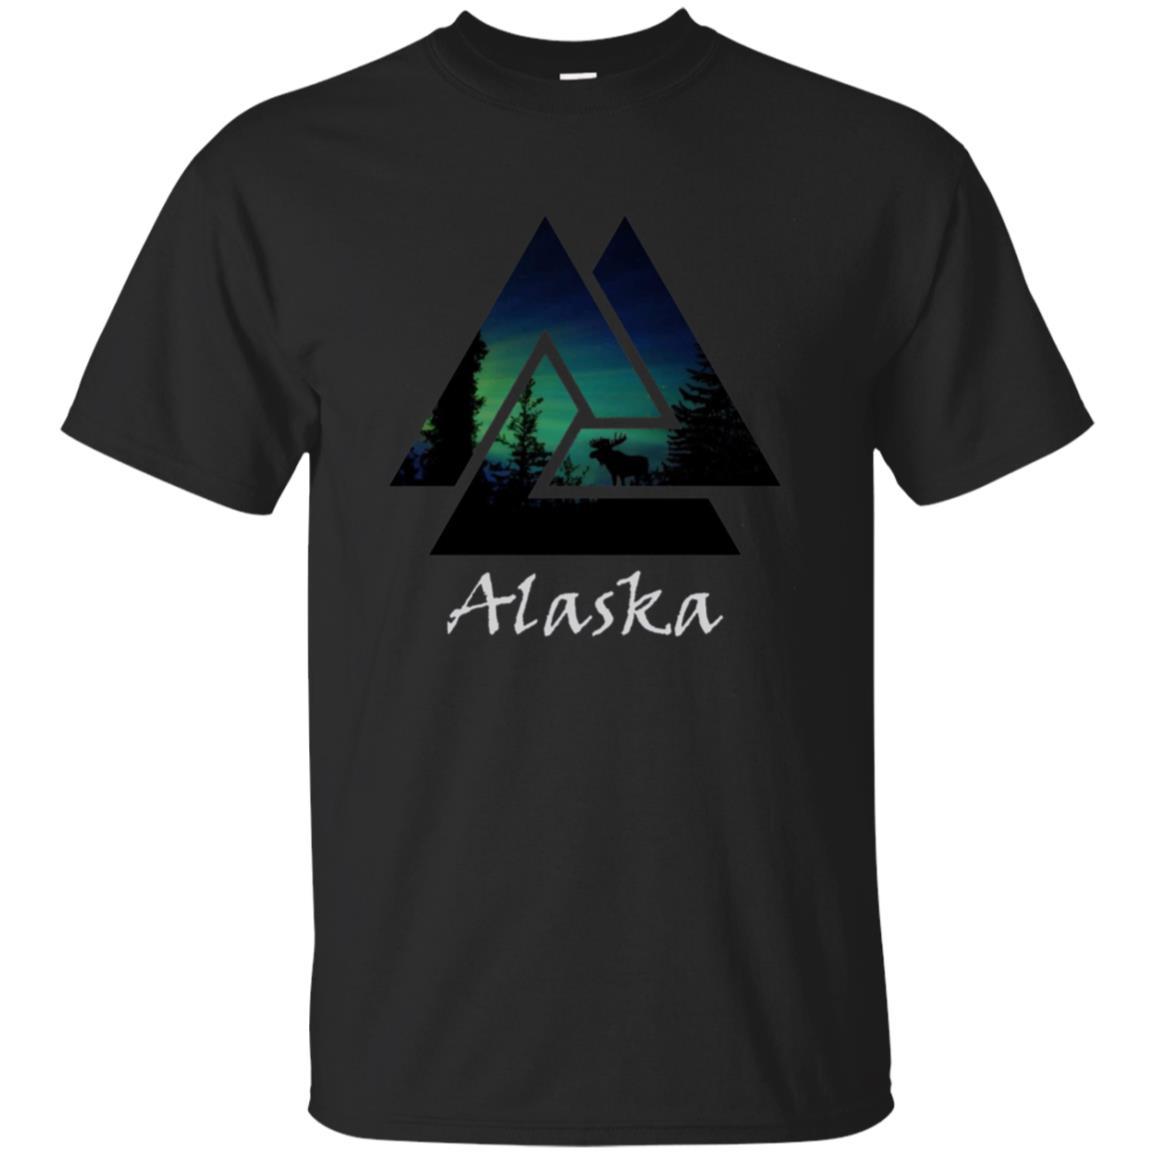 Find Alaska Yukon Moose Triangle T-shirt, Alaskan Travel Tee